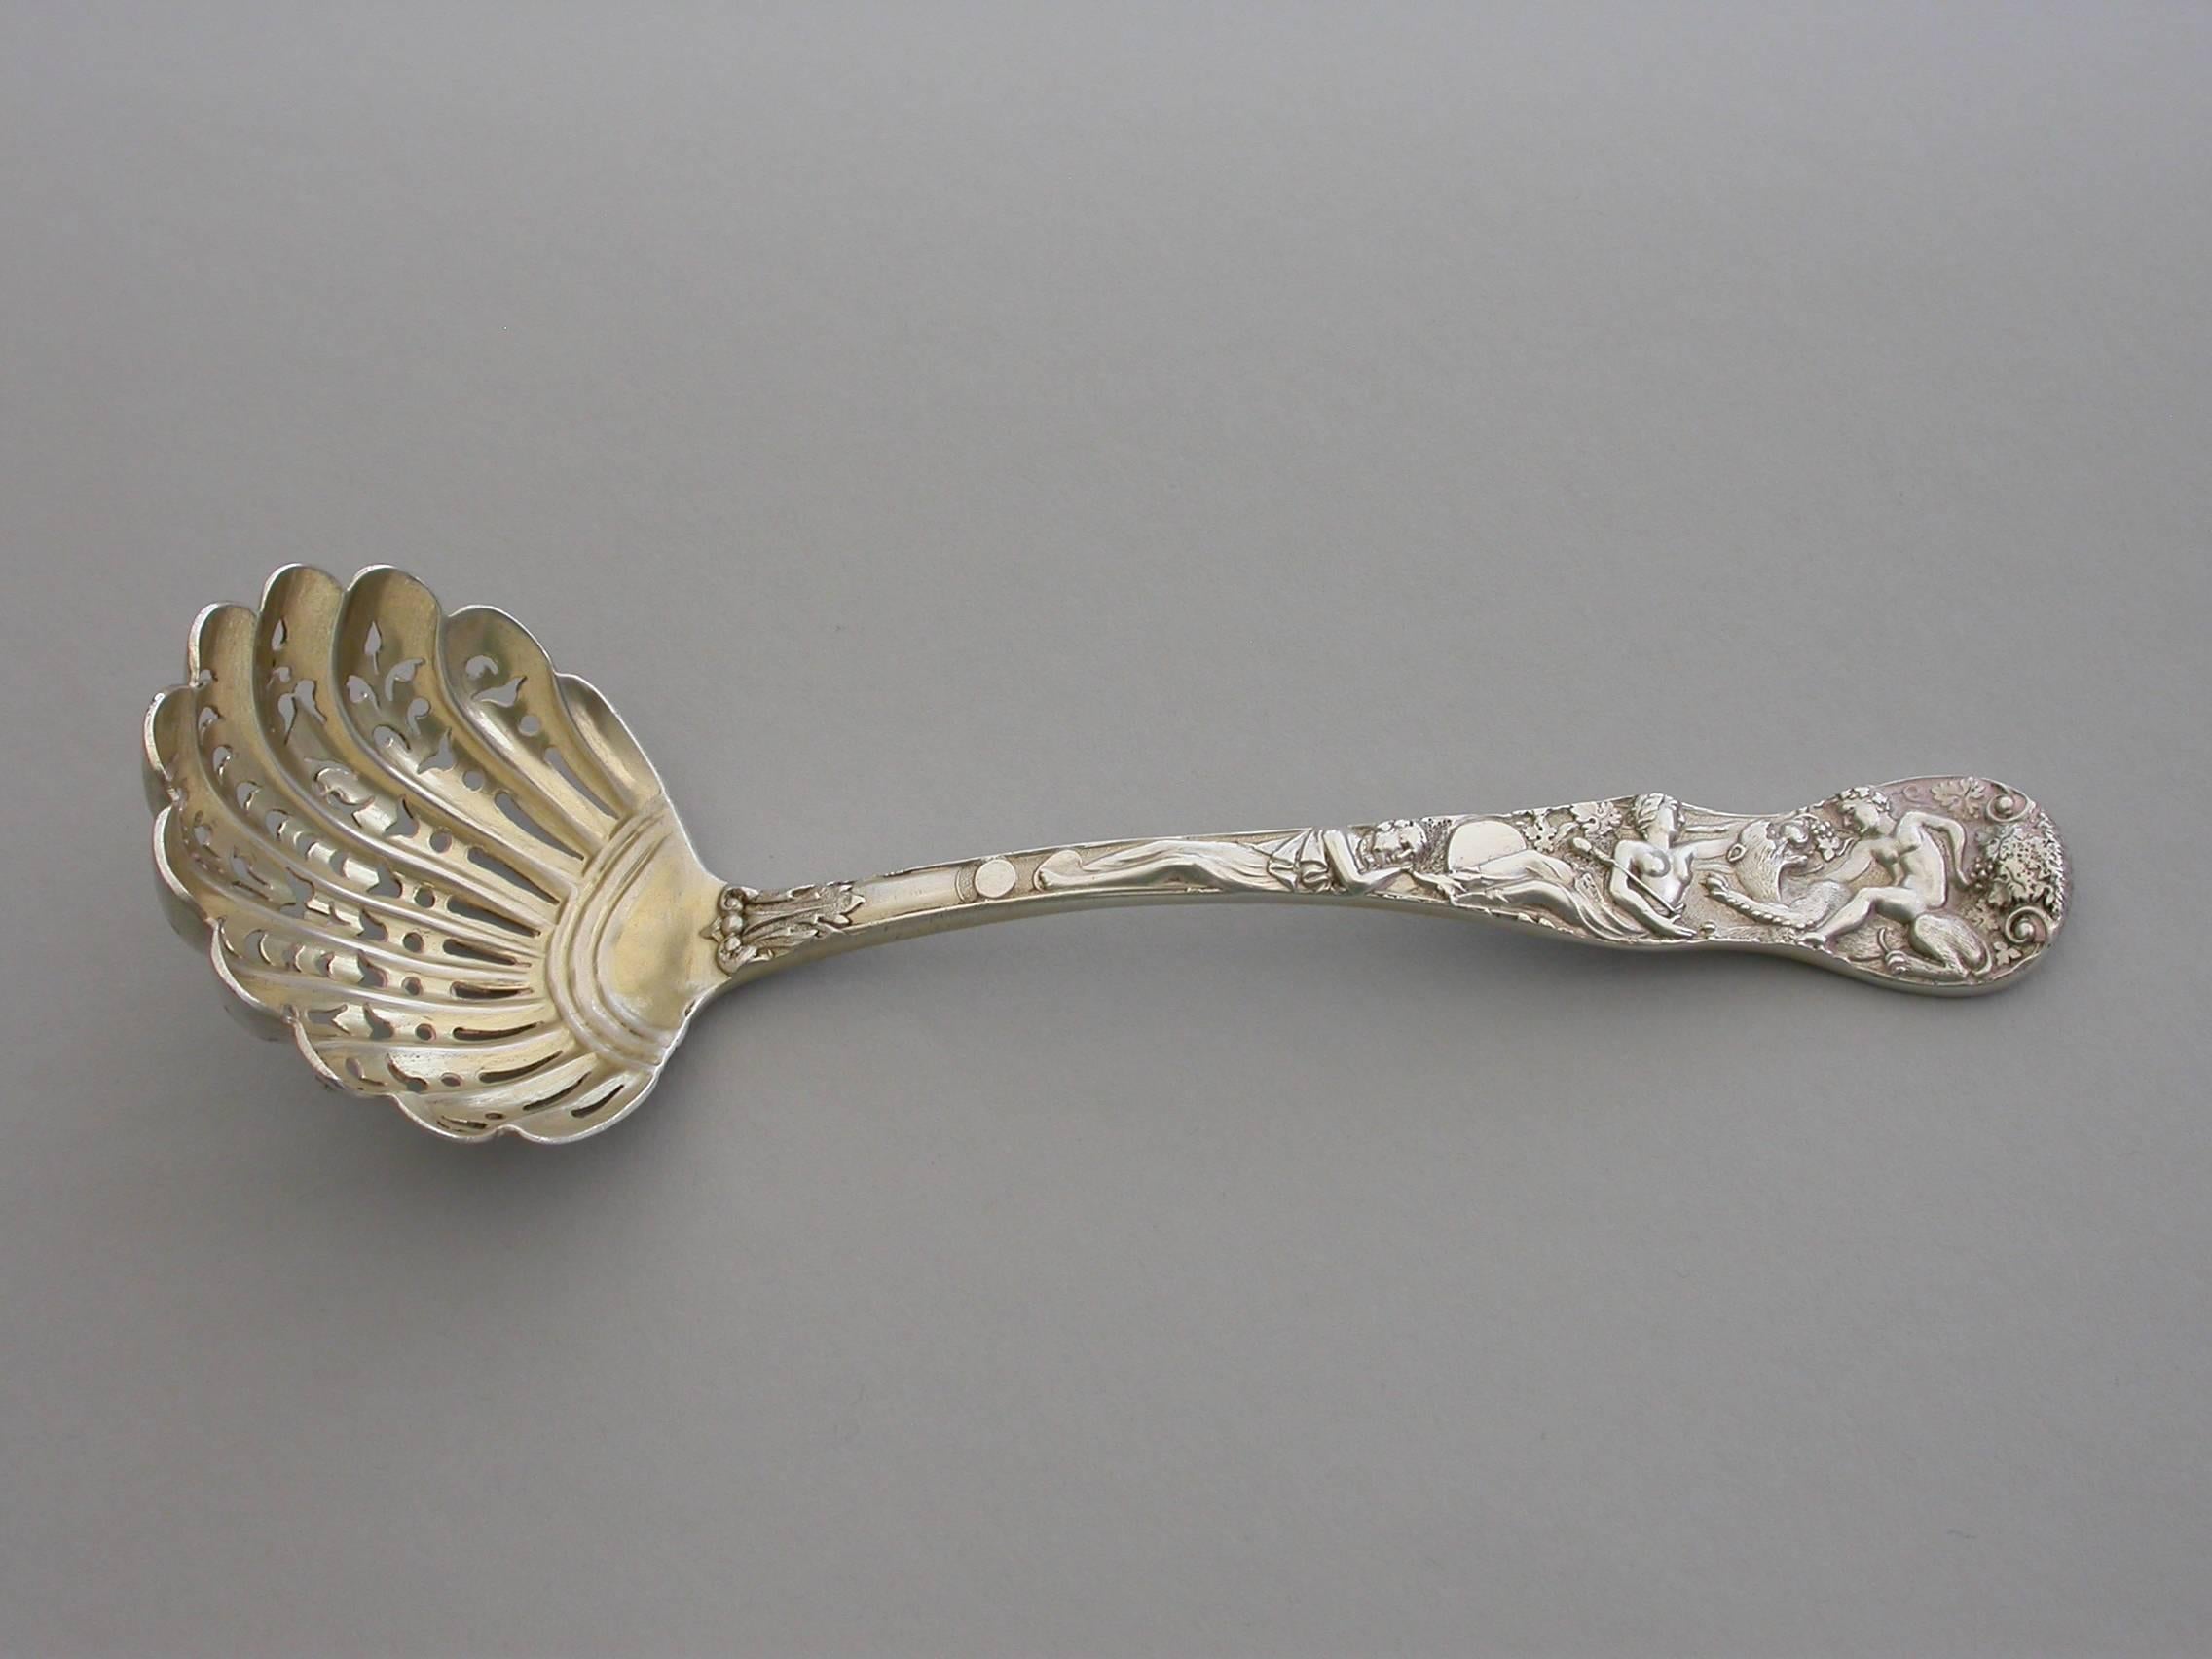 A fine quality Victorian cast silver sugar sifter ladle in 